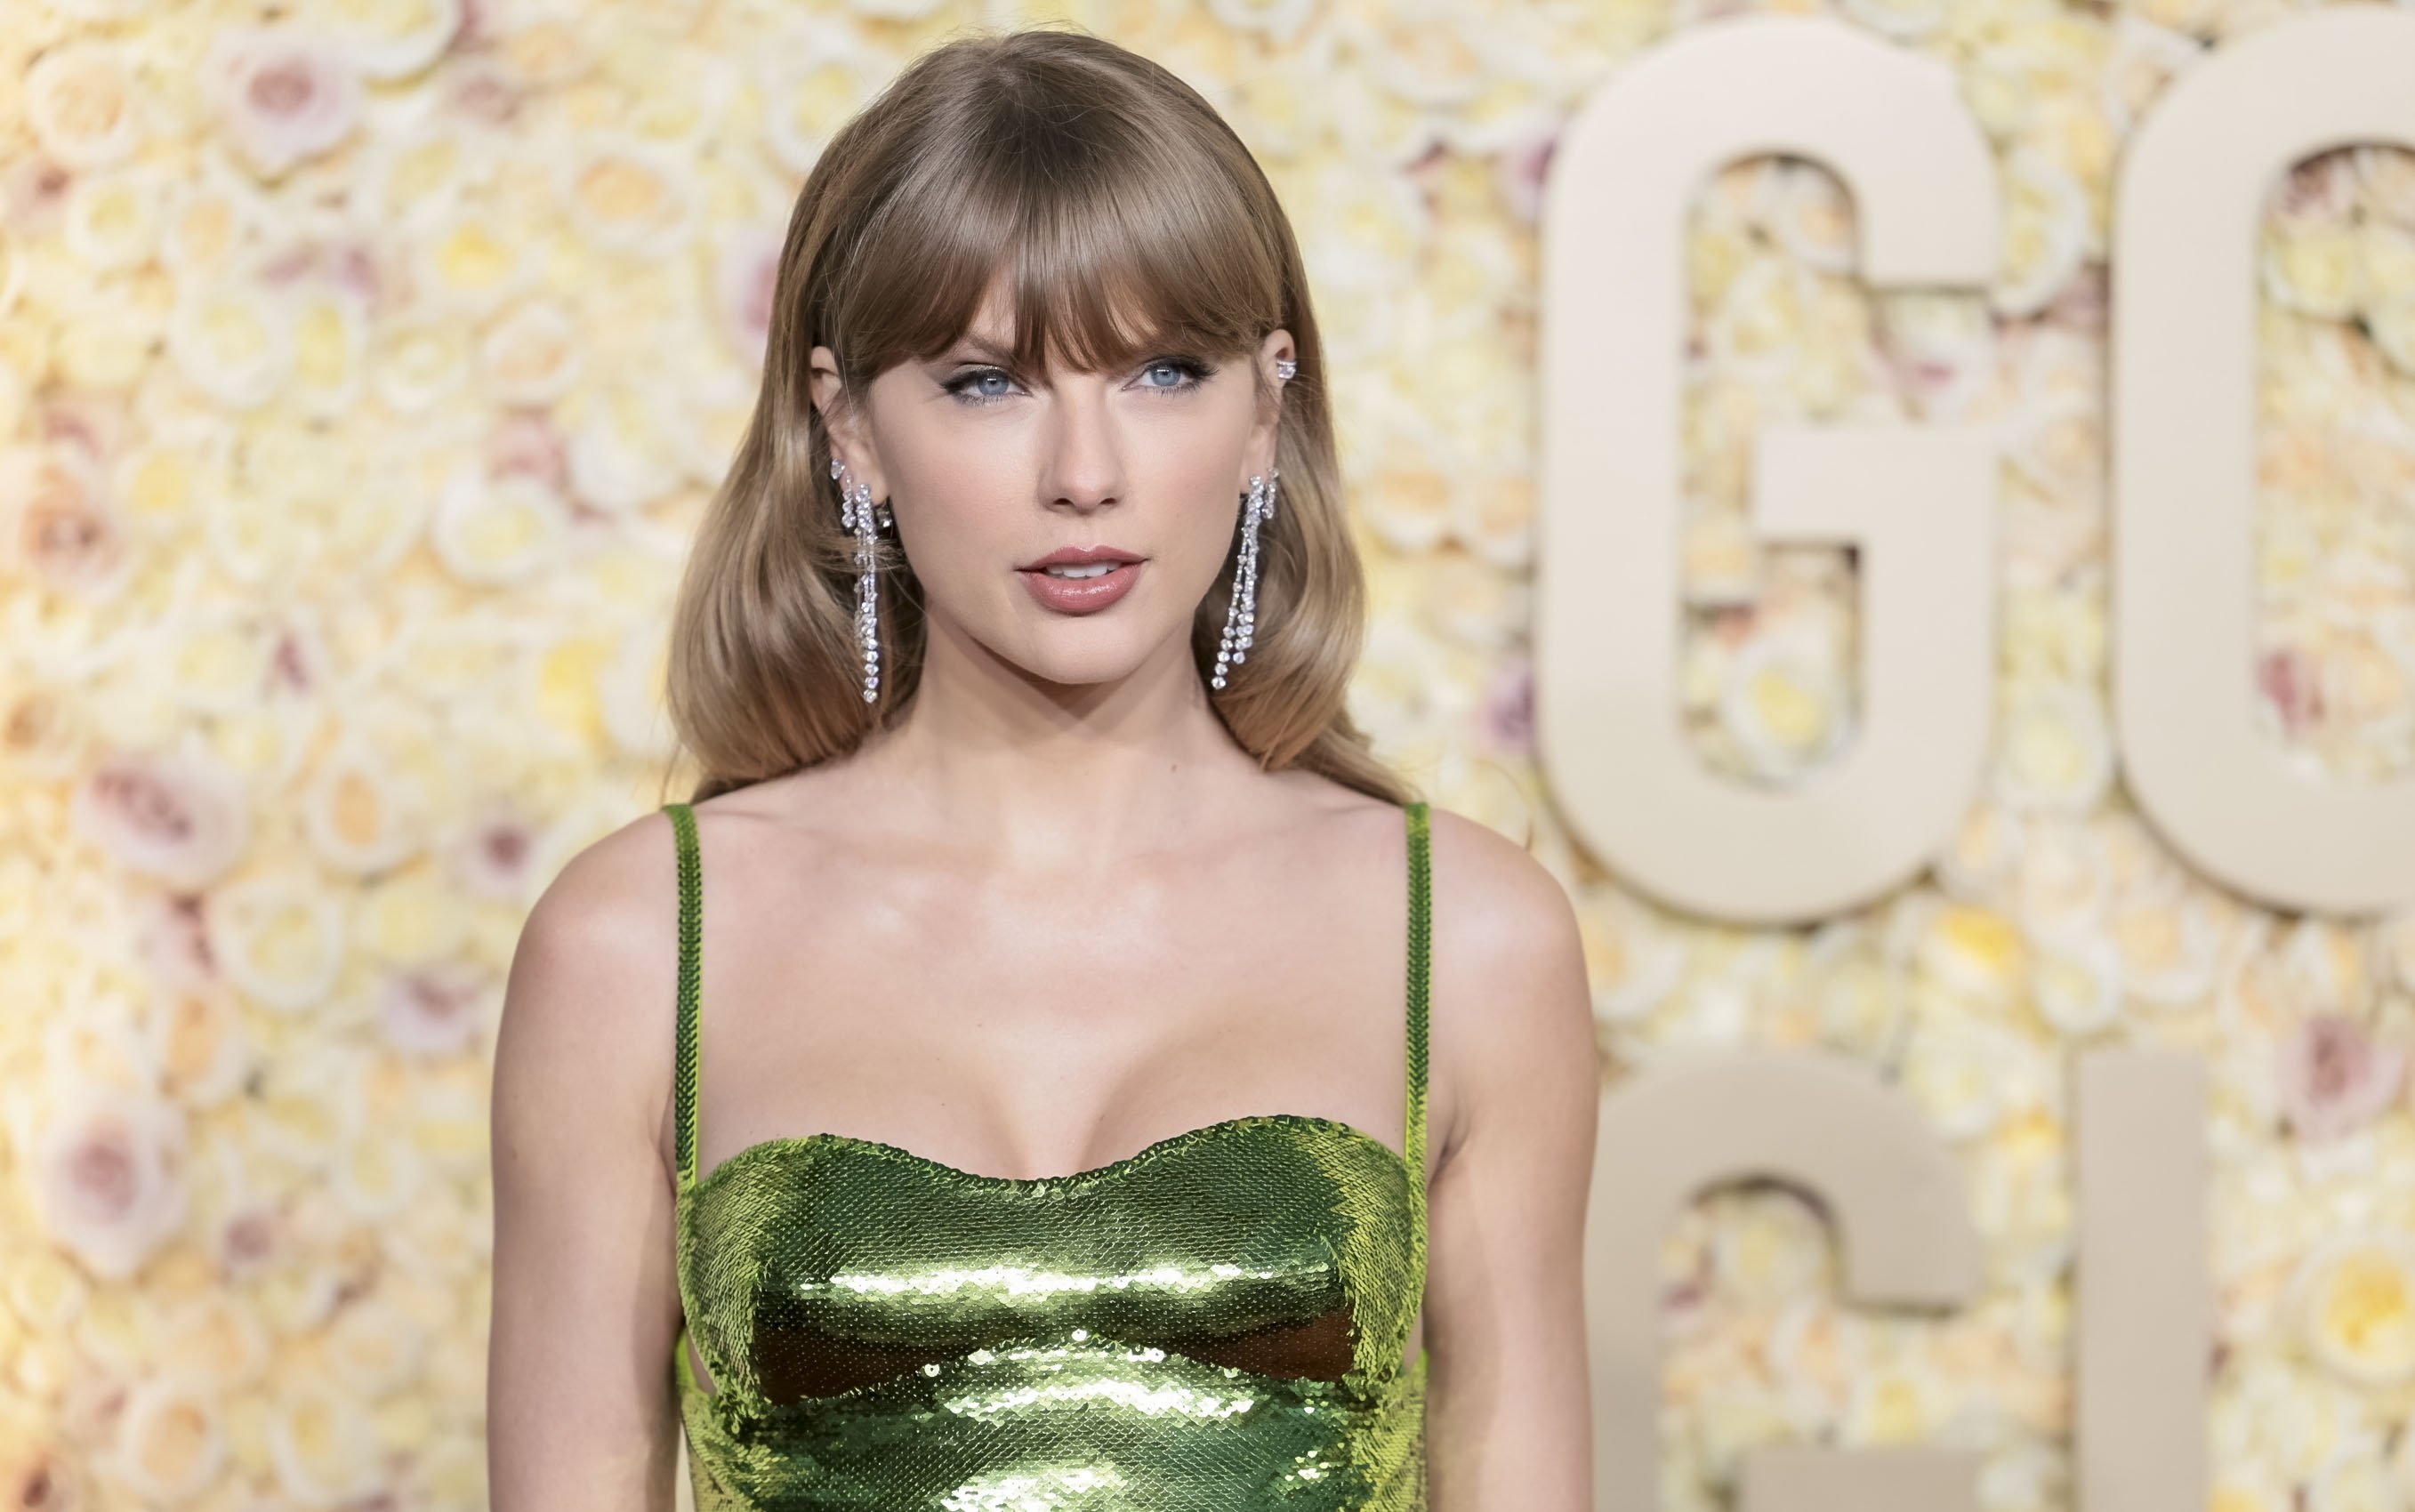 Taylor Swift at the recent Golden Globe Awards. Photo: EPA-EFE